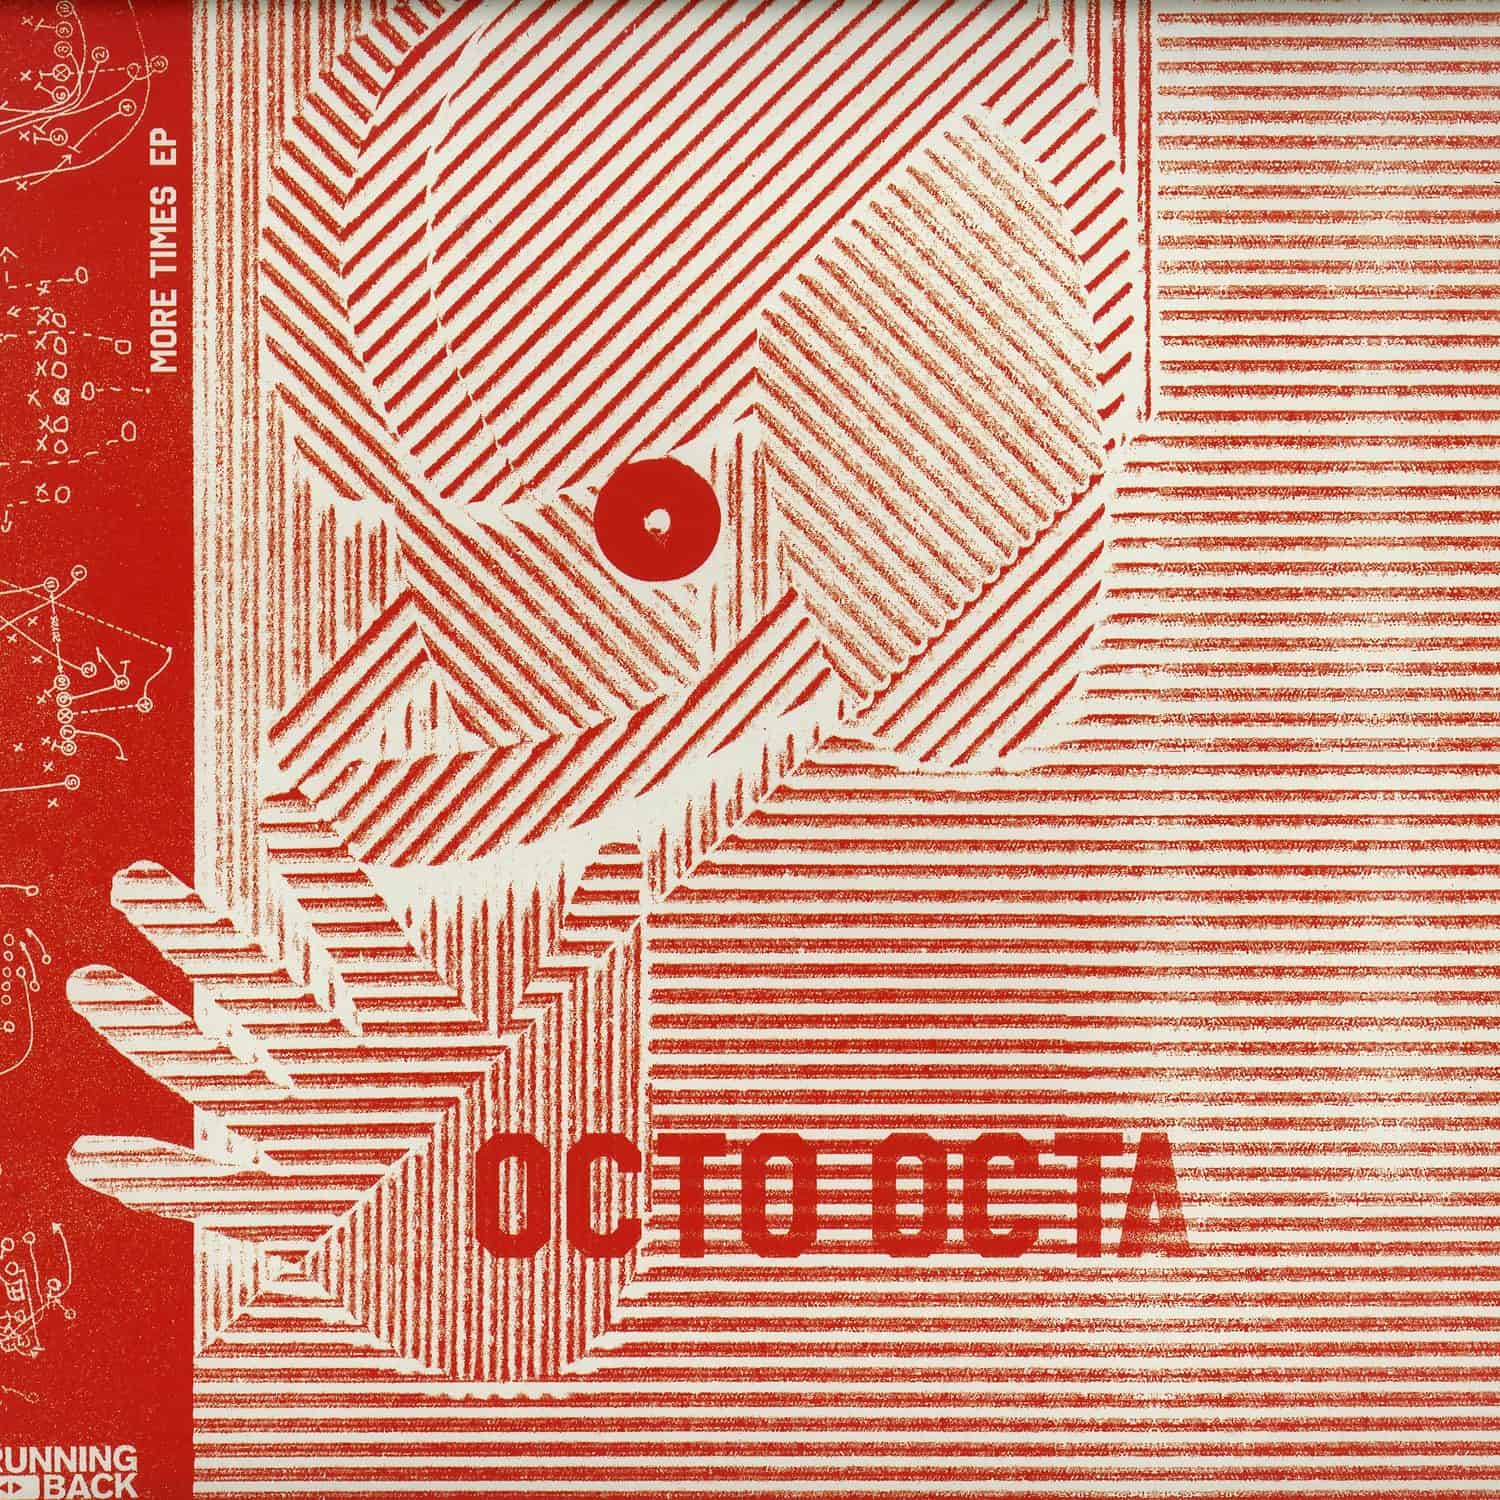 Octo Octa - MORE TIMES EP